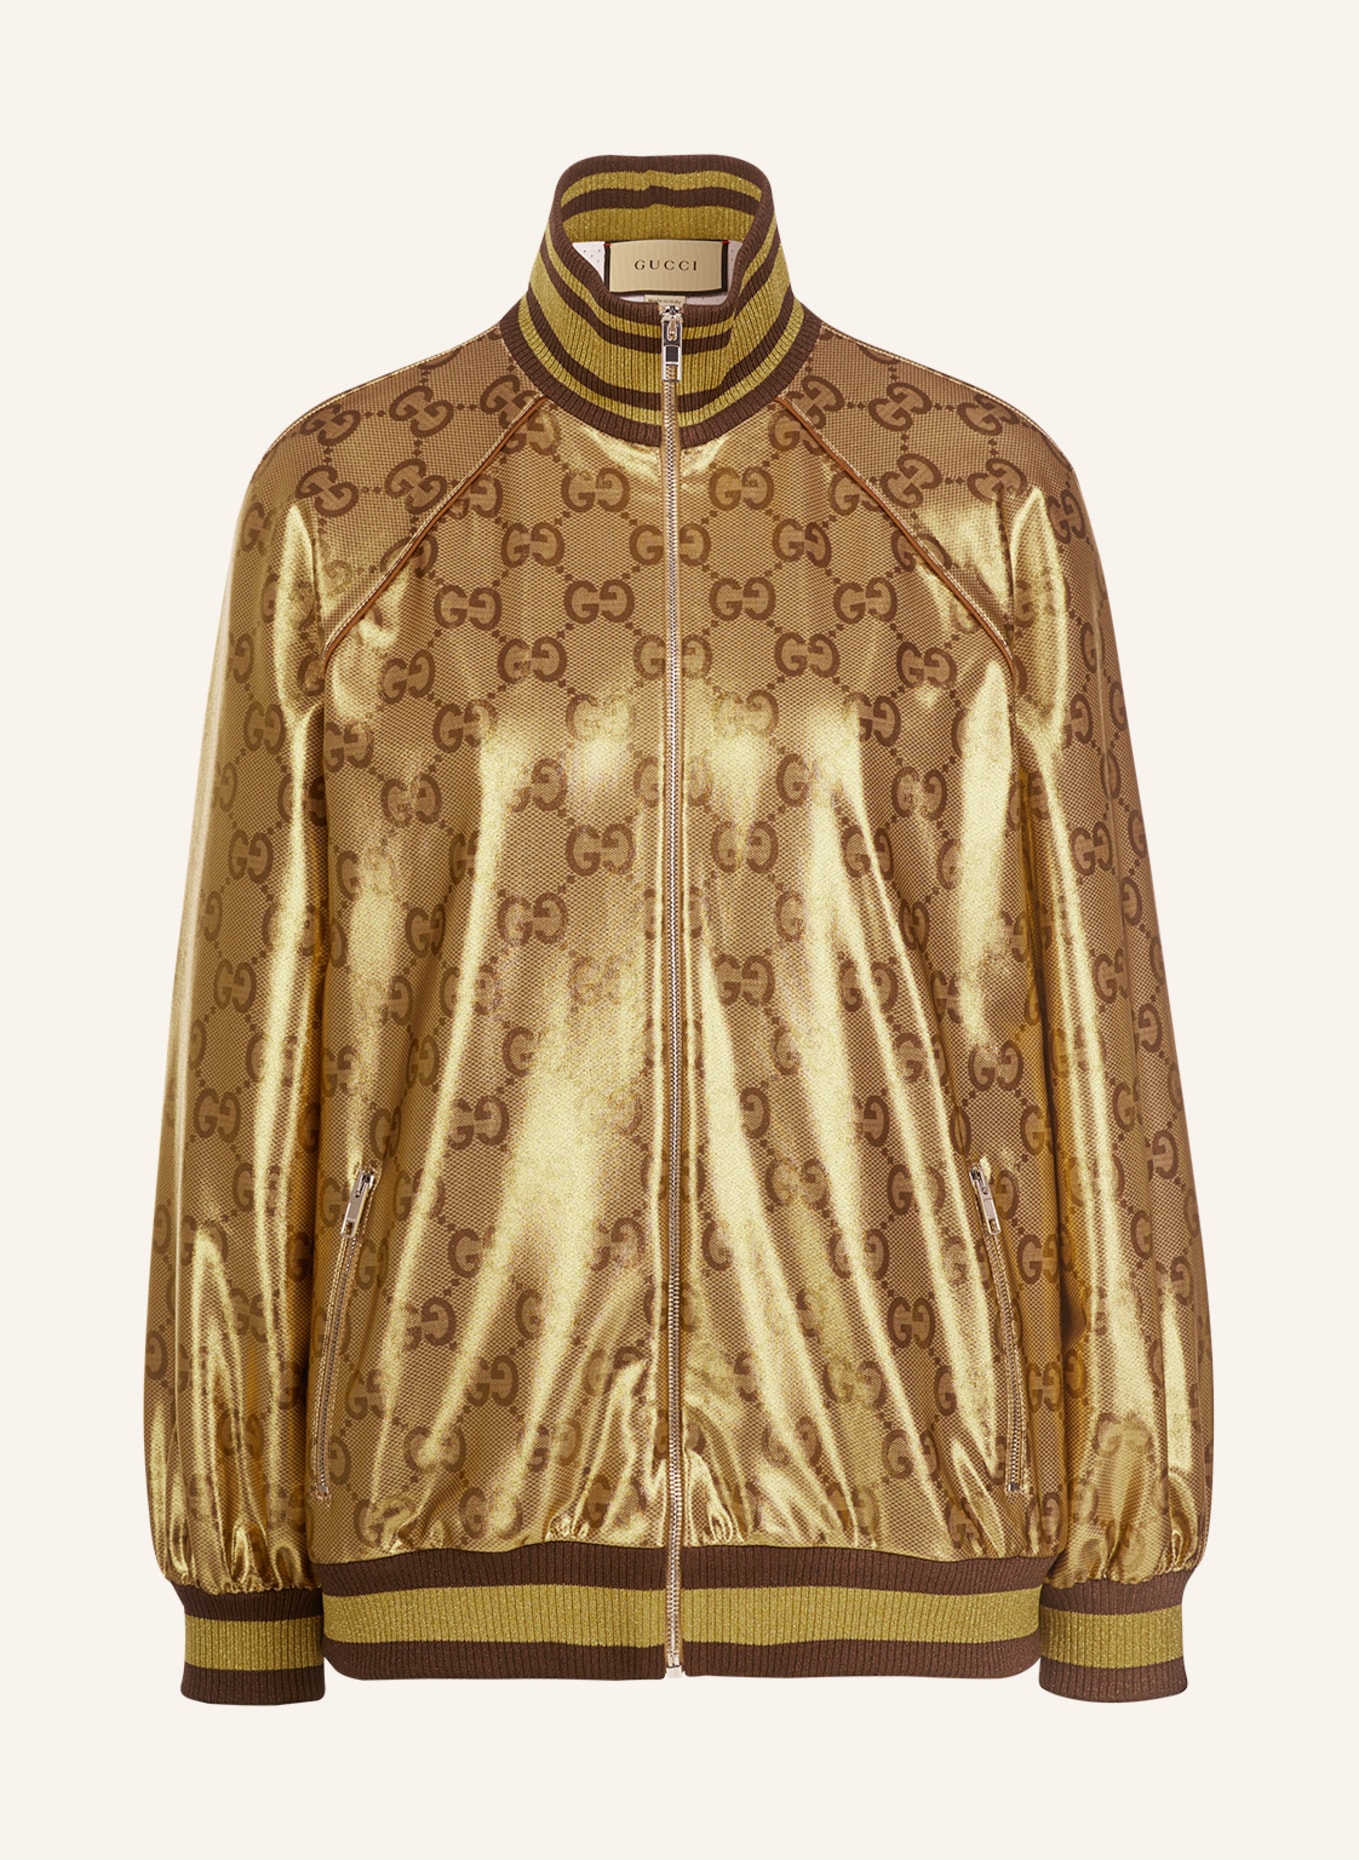 Bomber jacket with glitter thread in camel/ gold/ dark brown | Breuninger